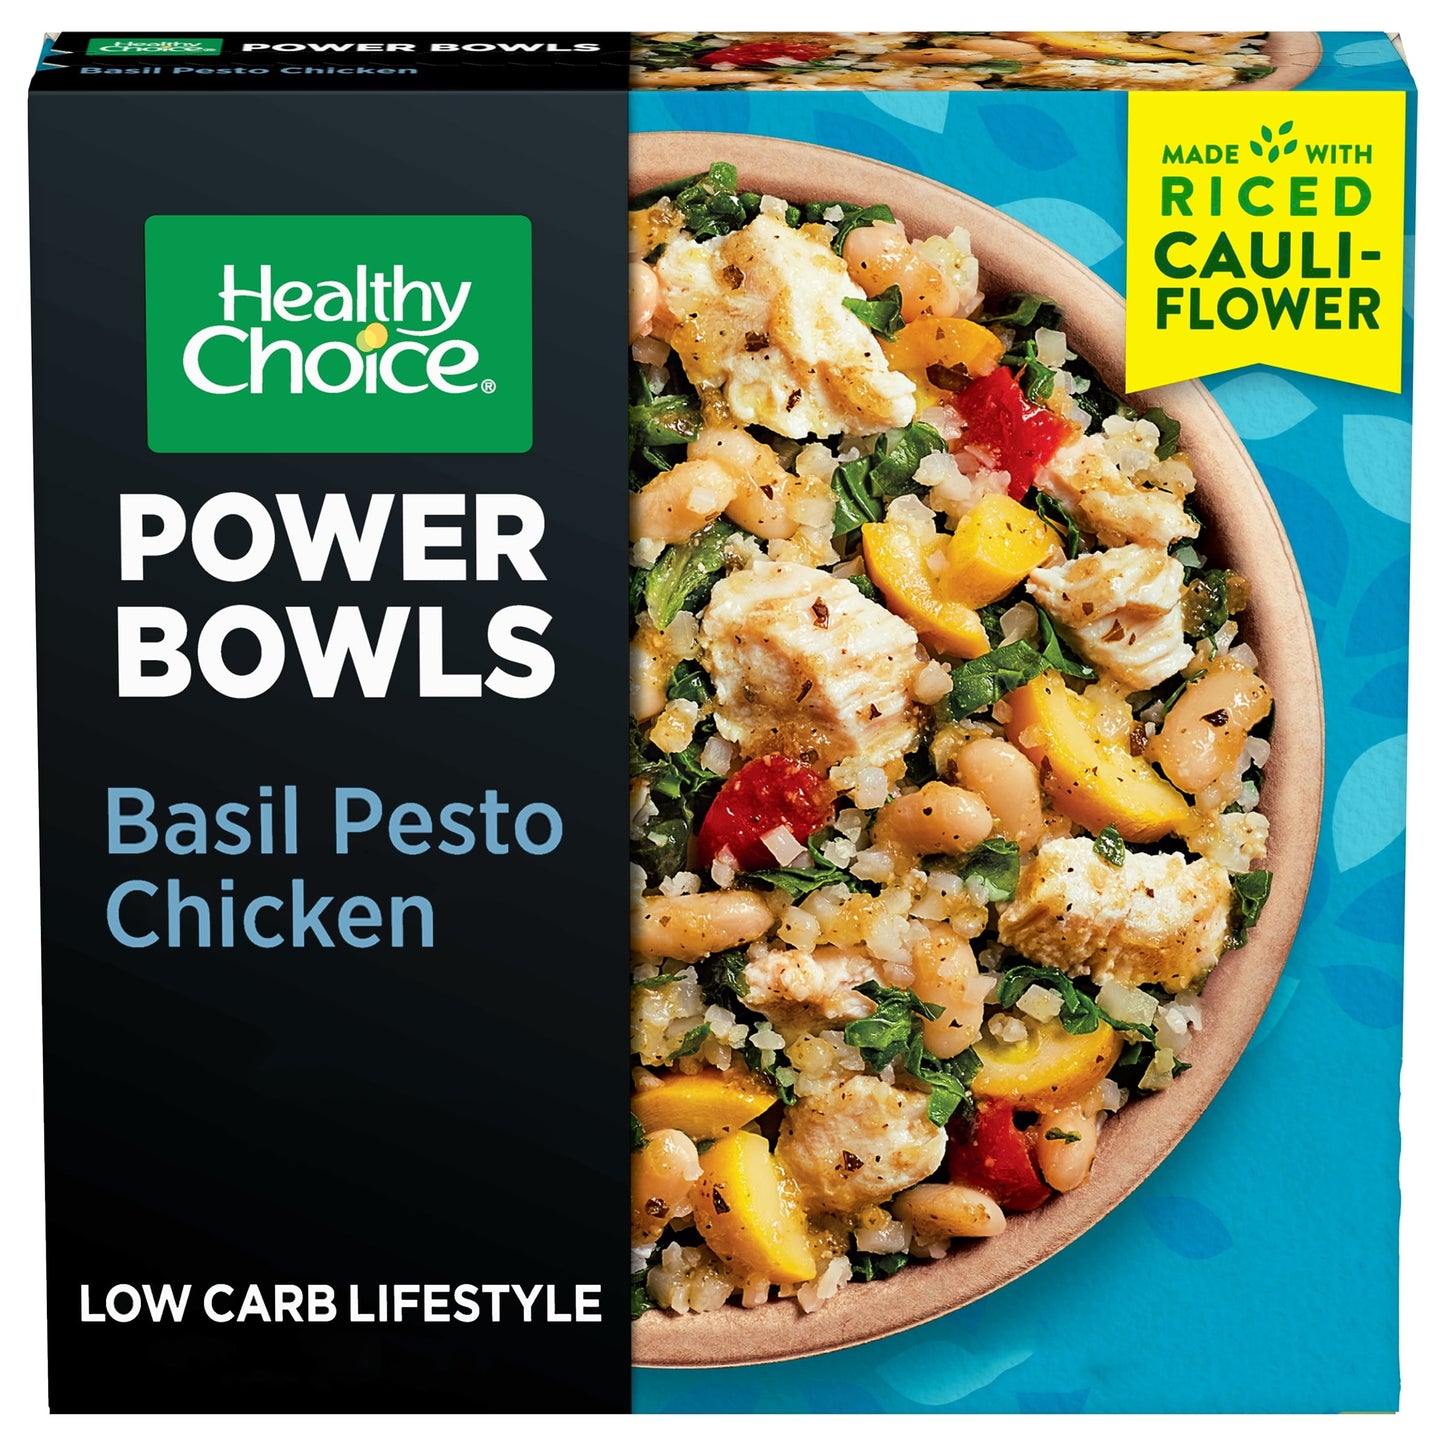 Healthy Choice Power Bowls Basil Pesto Chicken with Riced Cauliflower, 9.25 oz (Frozen)